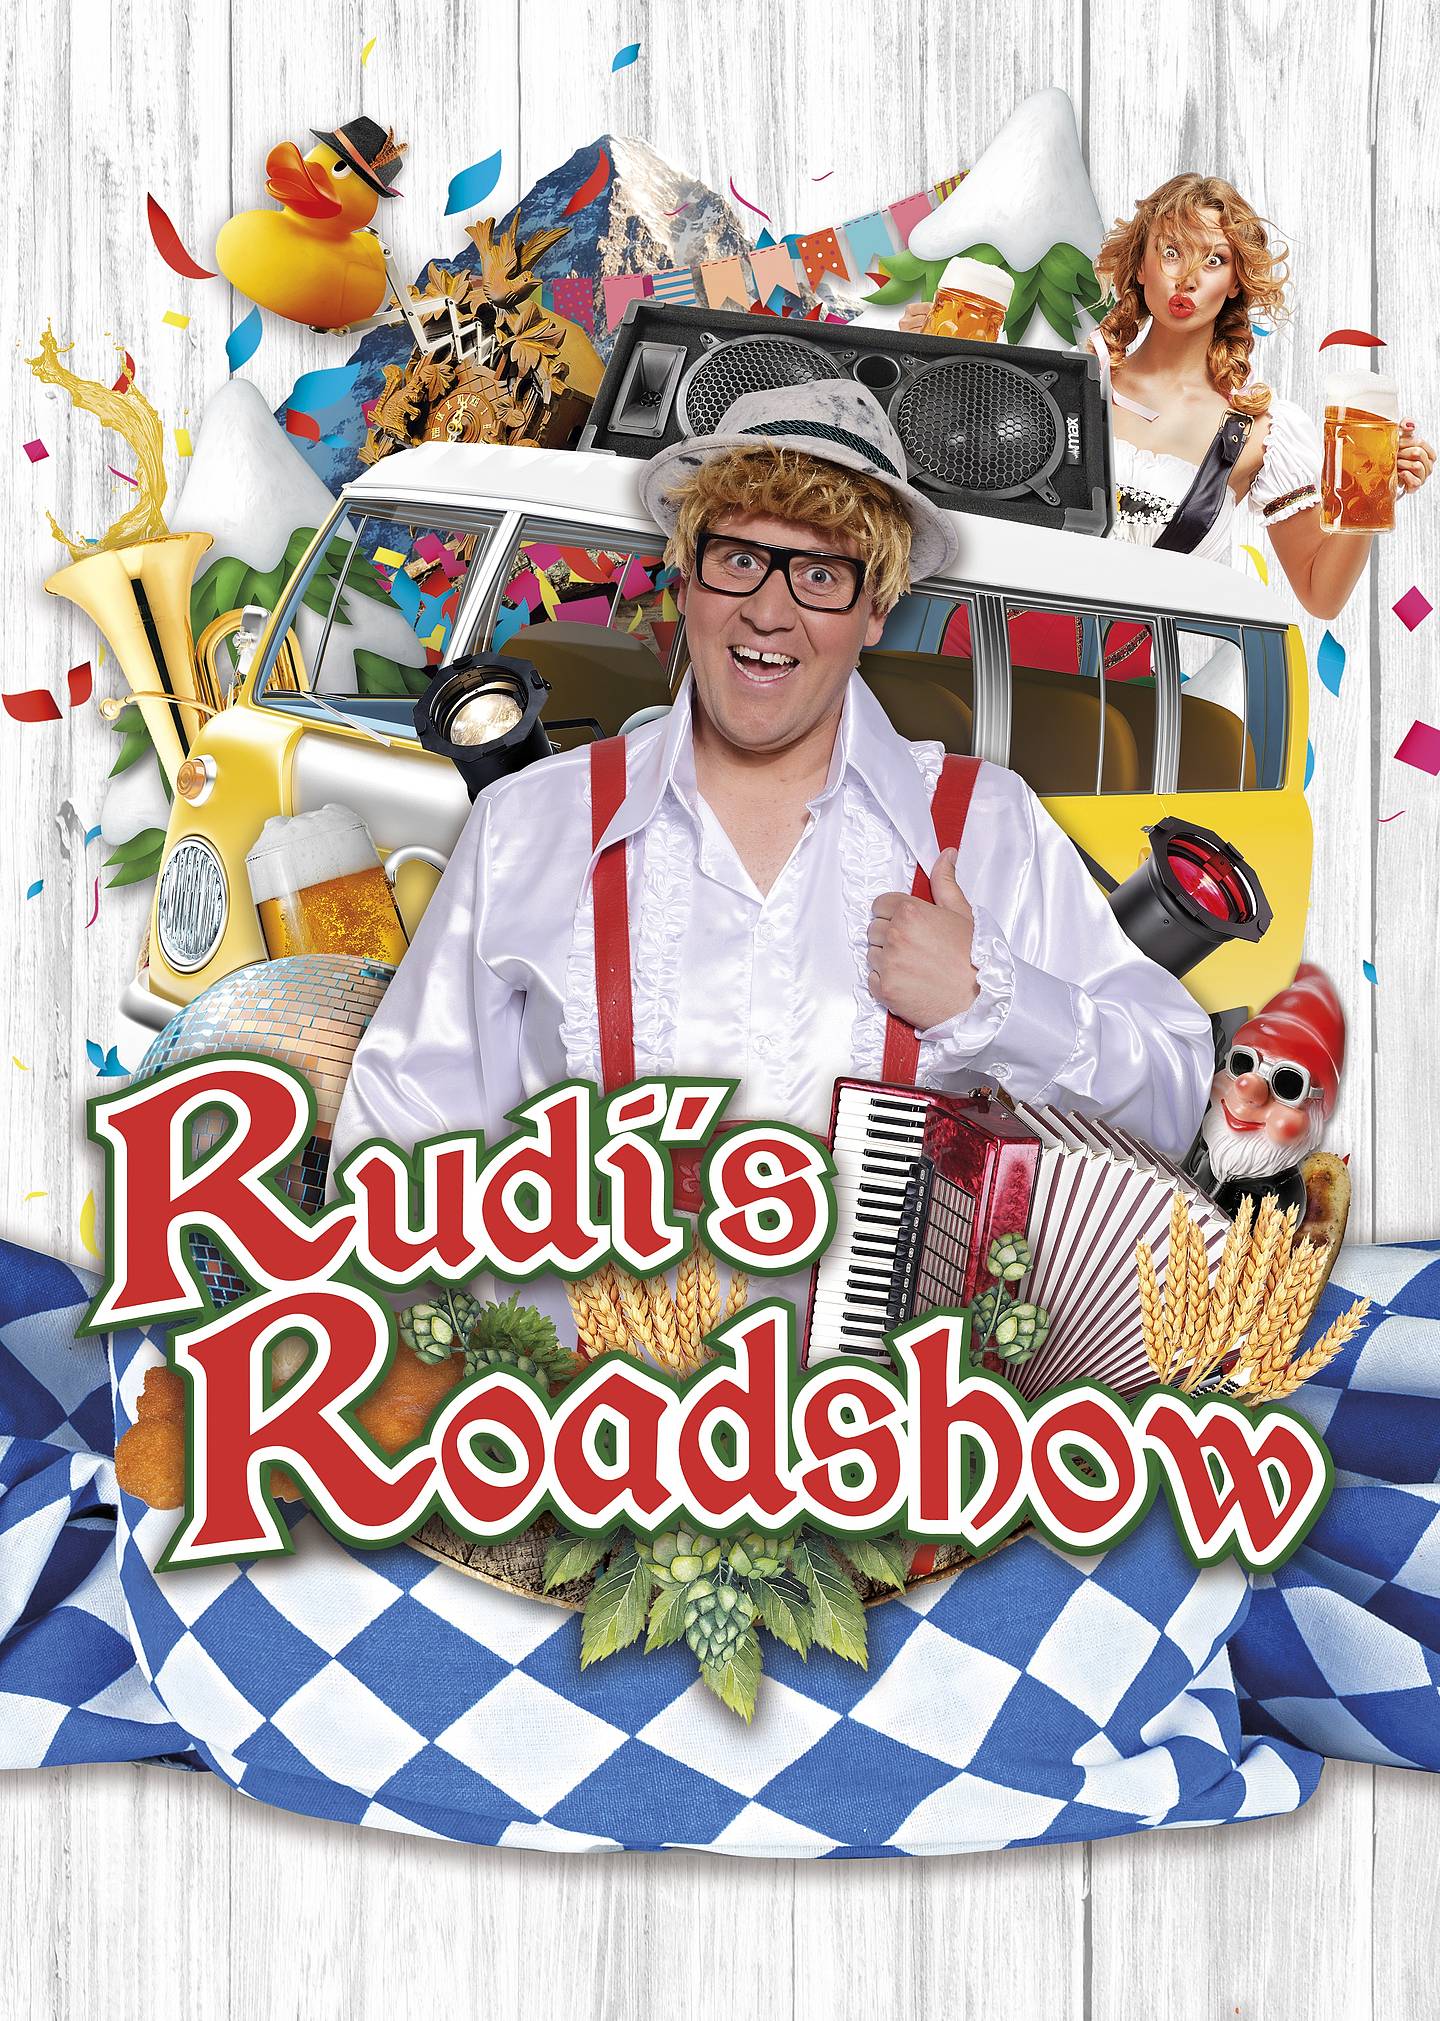 Persfoto van Rudi's Duitse Raodshow, avondvullend entertainment bij Oktoberfeesrartiesten.nl